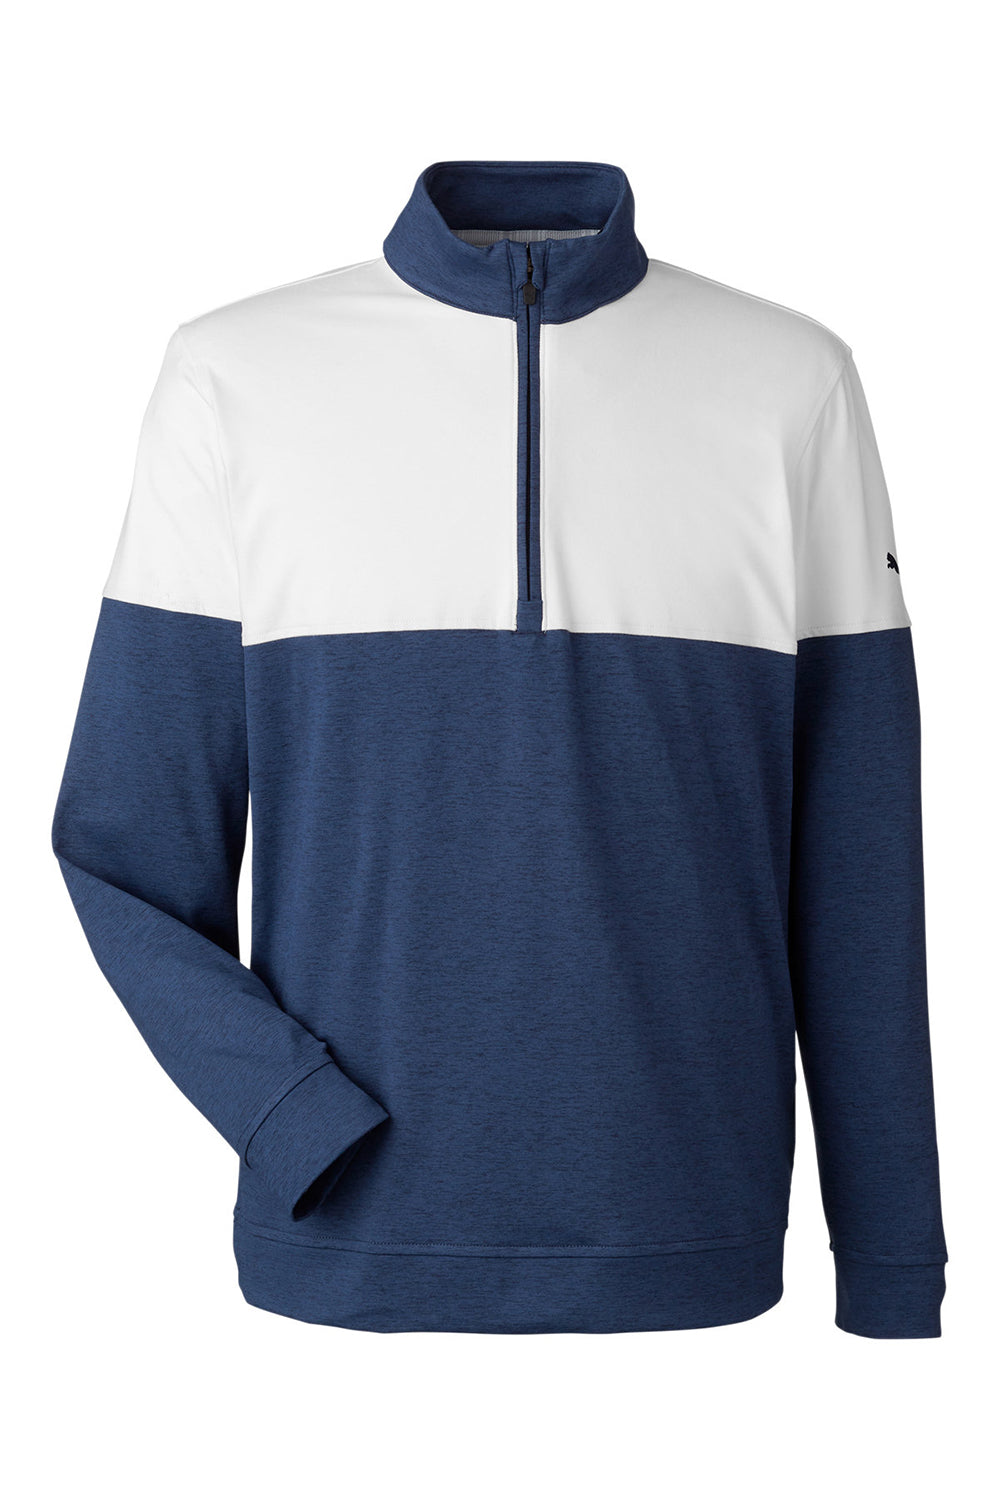 Puma 595803 Mens Cloudspun Warm Up 1/4 Zip Sweatshirt Peacoat Blue/White Flat Front